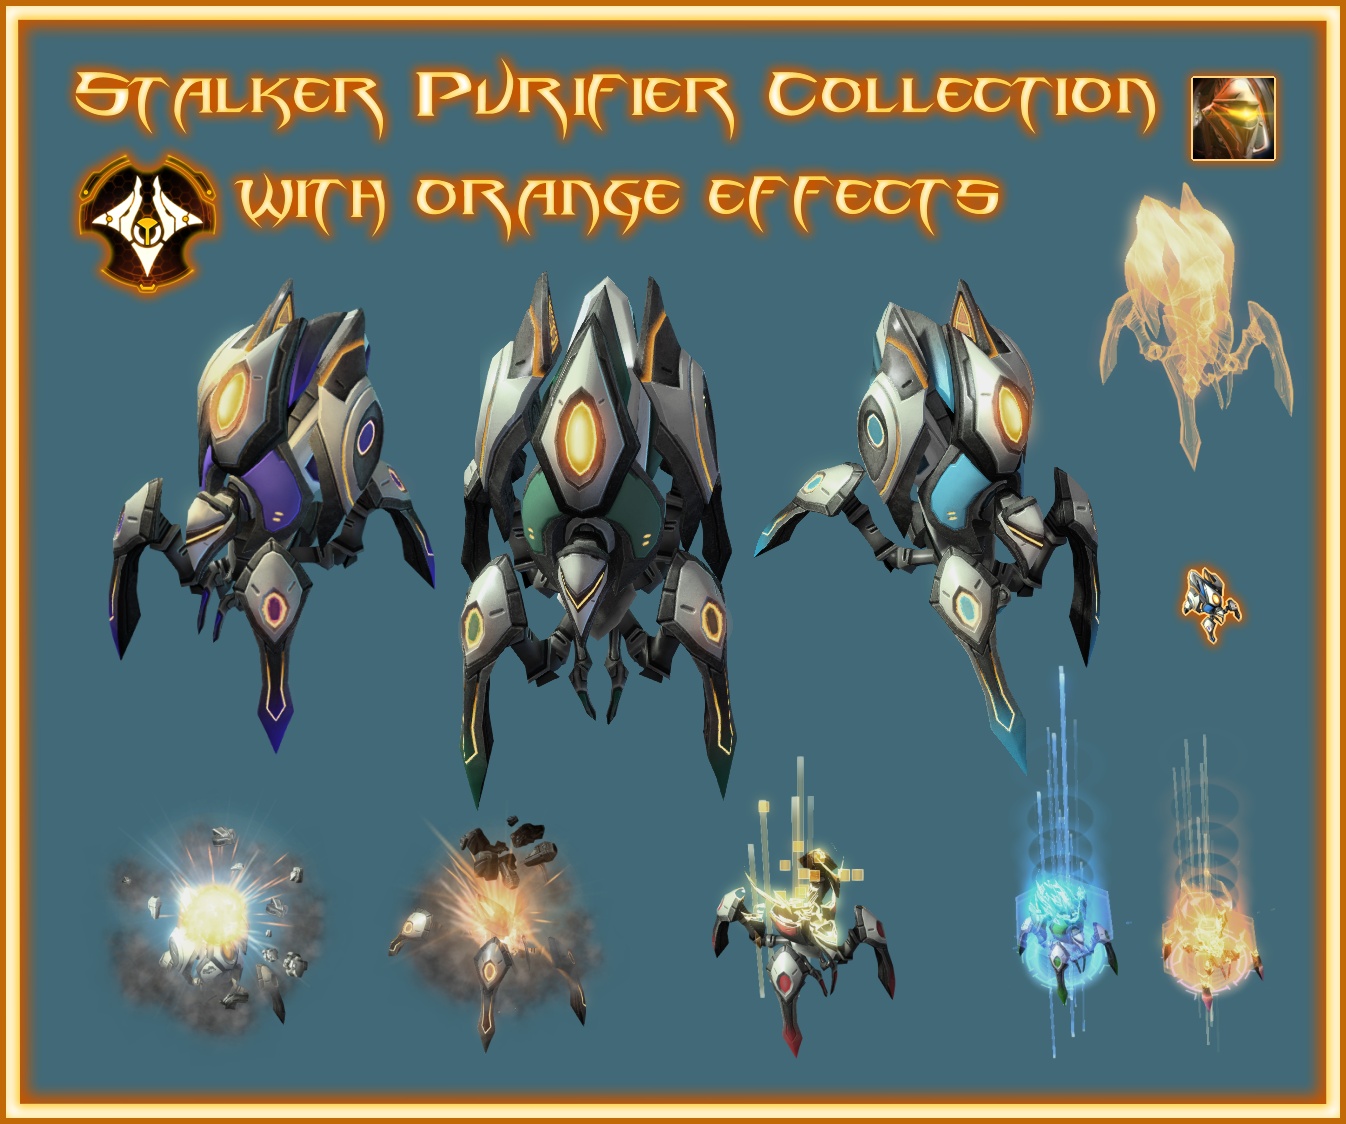 Instigator (Purifier Collection Stalker) - With Orange Effects